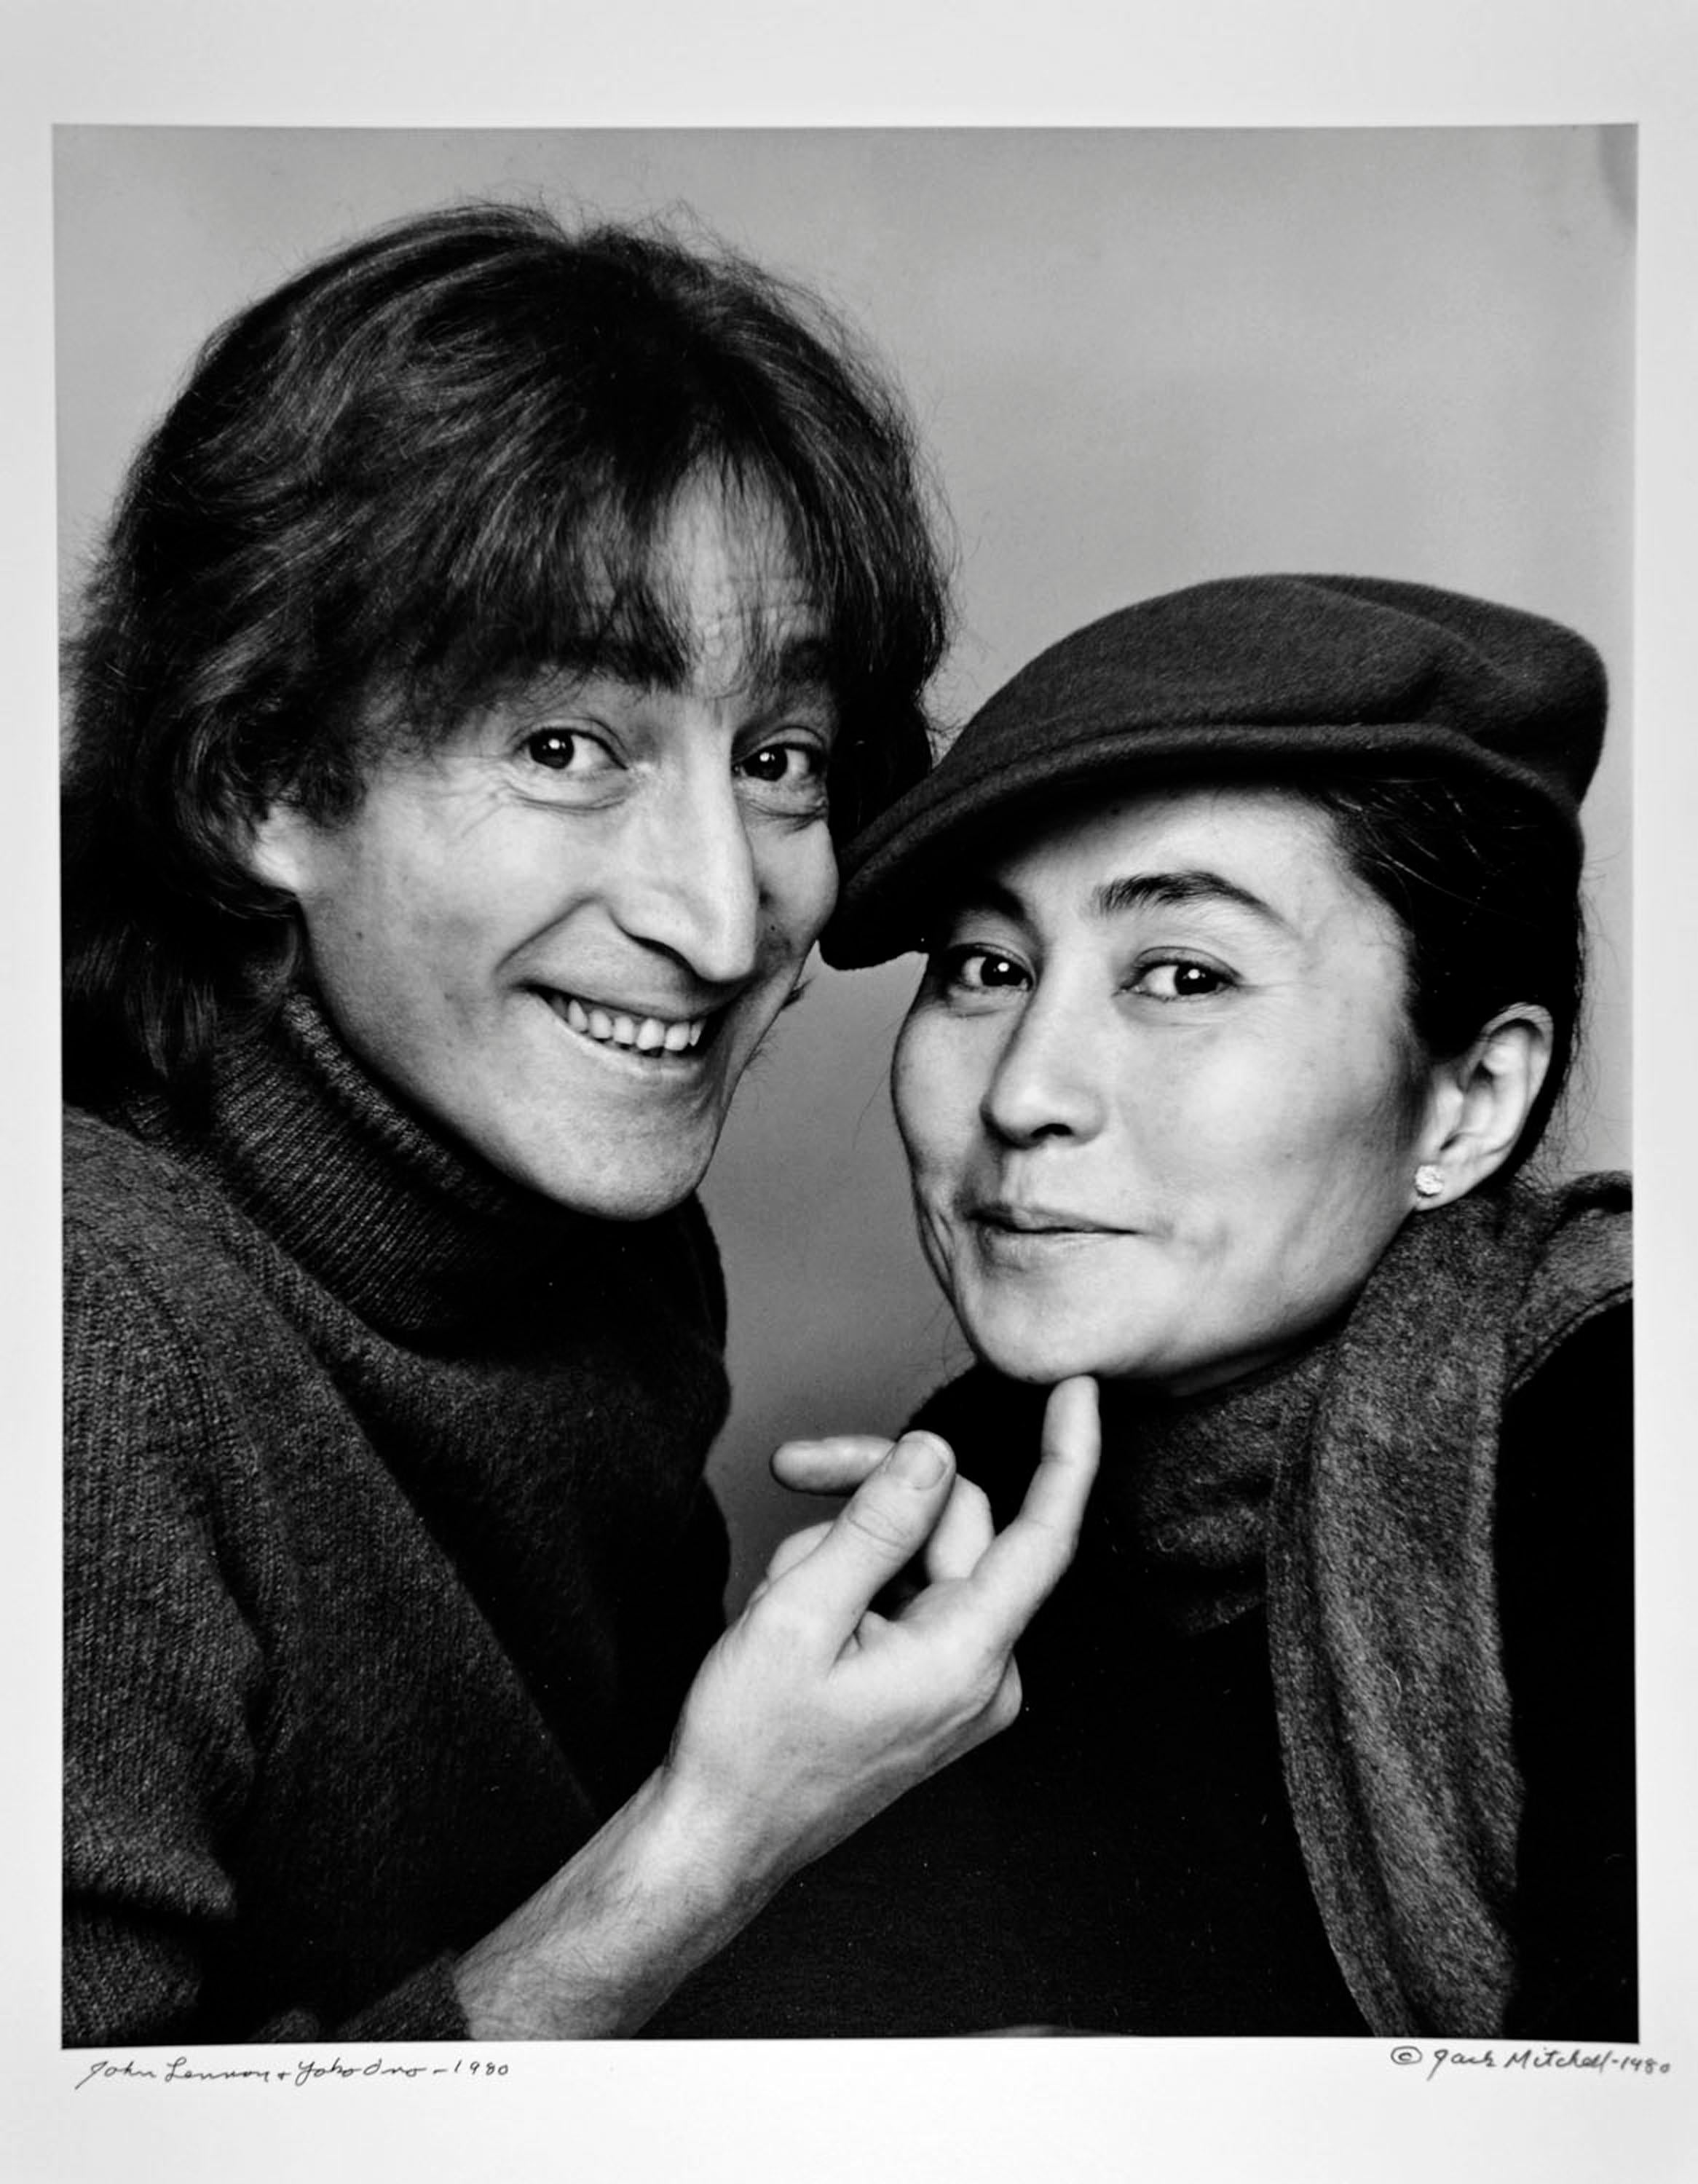 Jack Mitchell Black and White Photograph – John Lennon und Yoko Ono fotografiert am 2. November, signiert